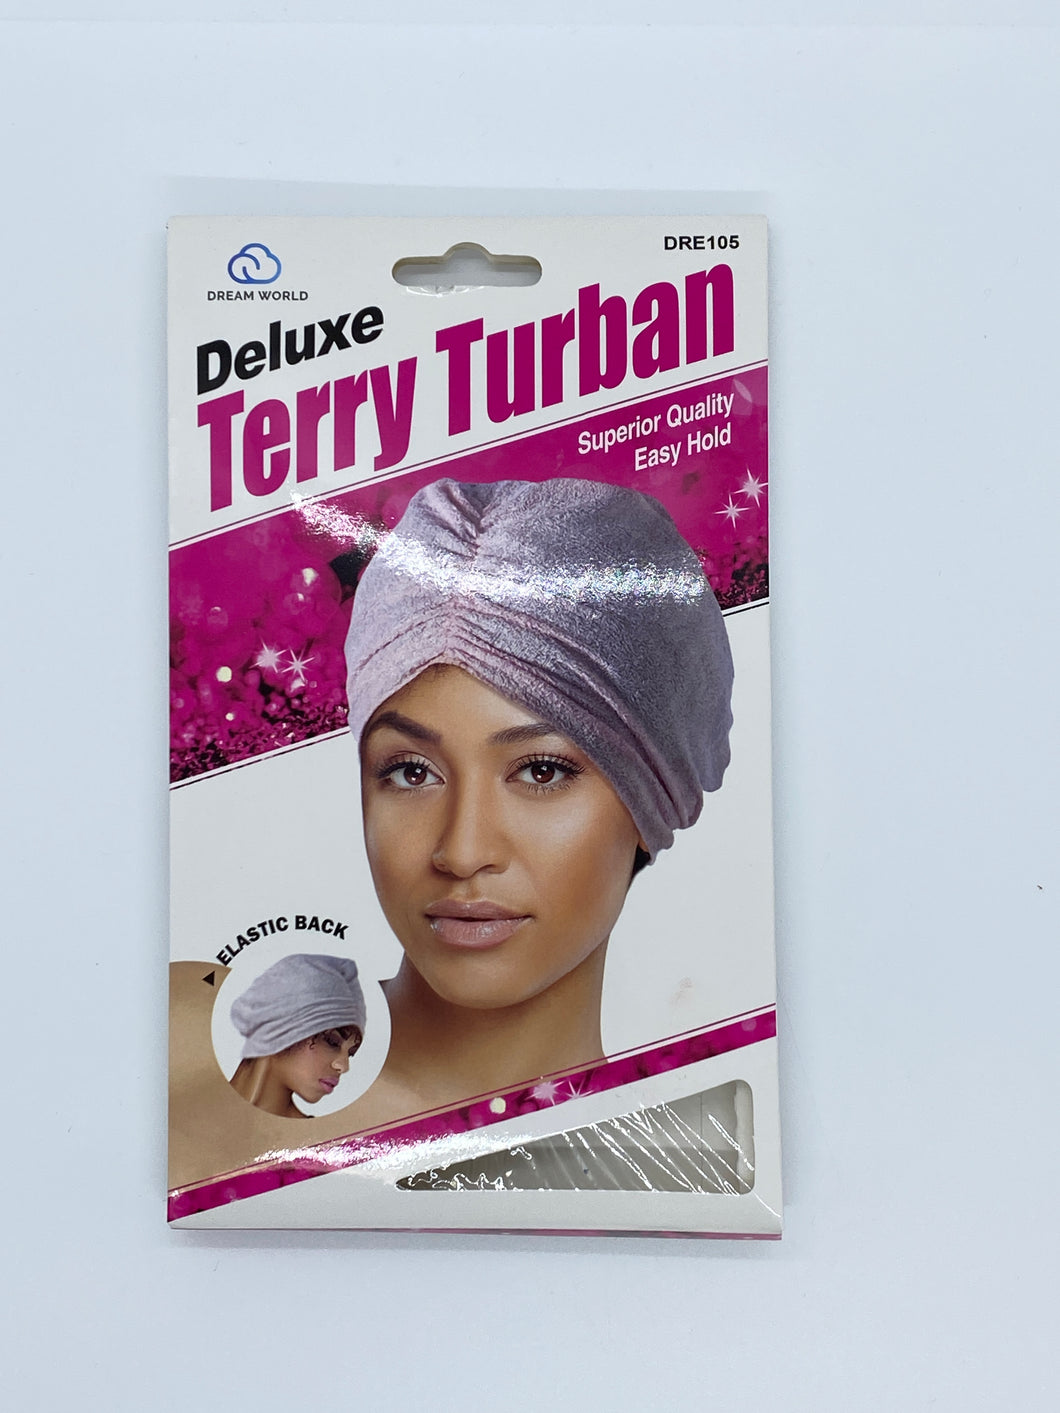 Dream World Deluxe Terry Turban